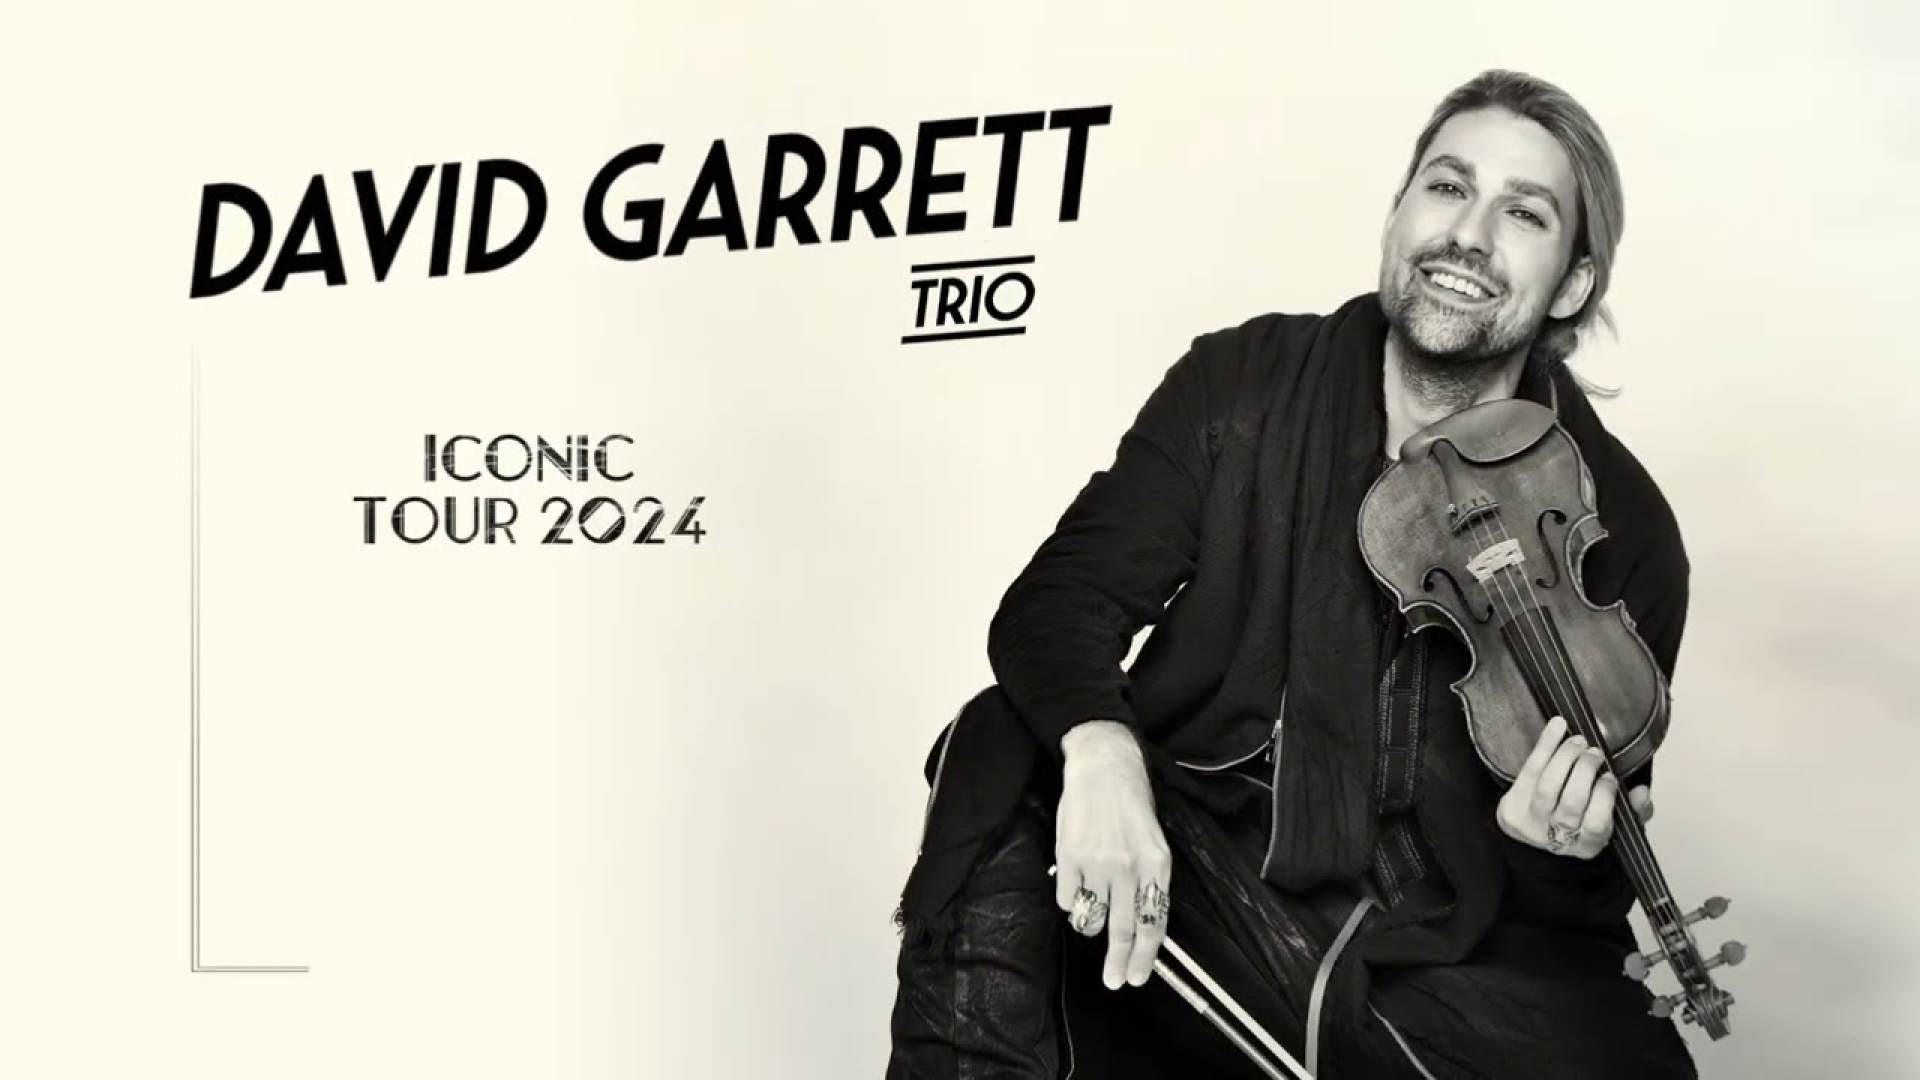 David Garrett Iconic Tour 2024